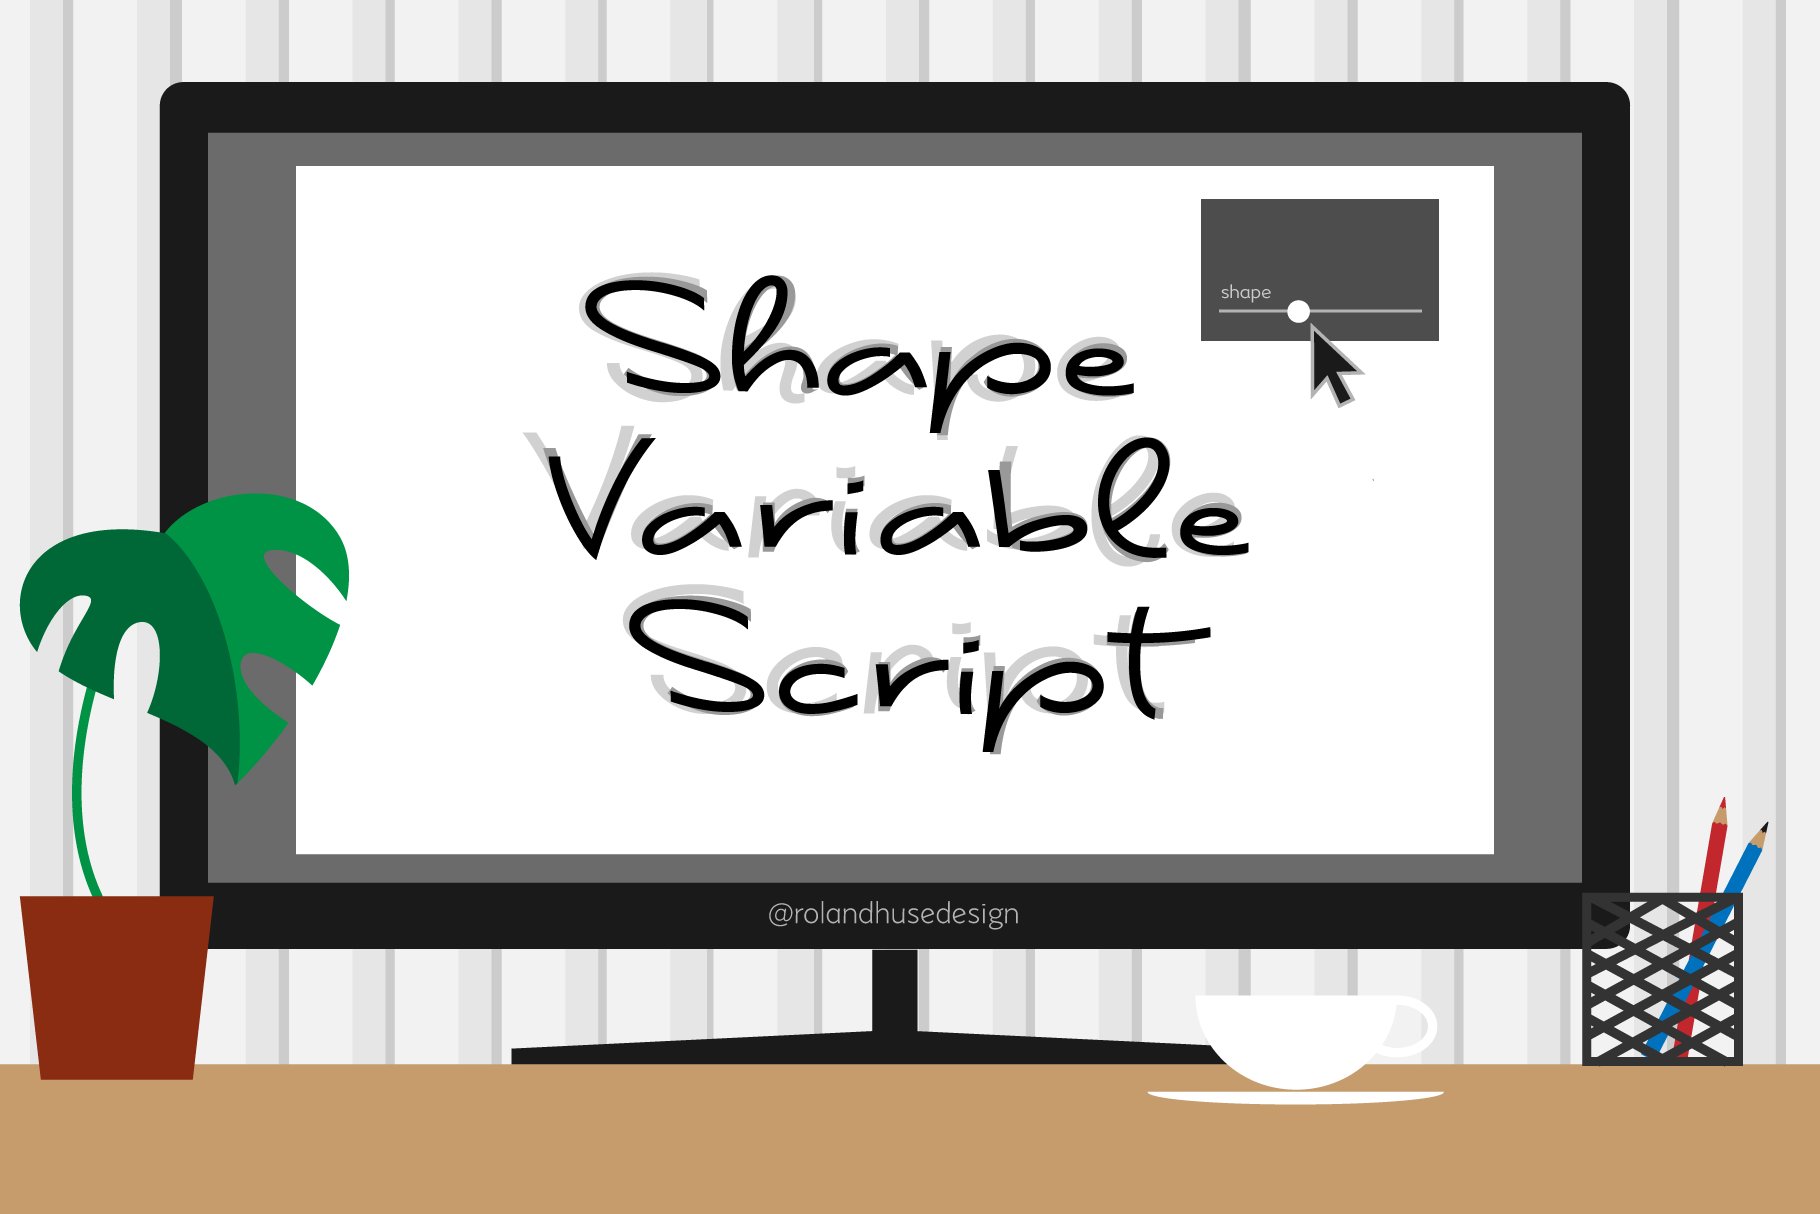 Shape Variable Script cover image.